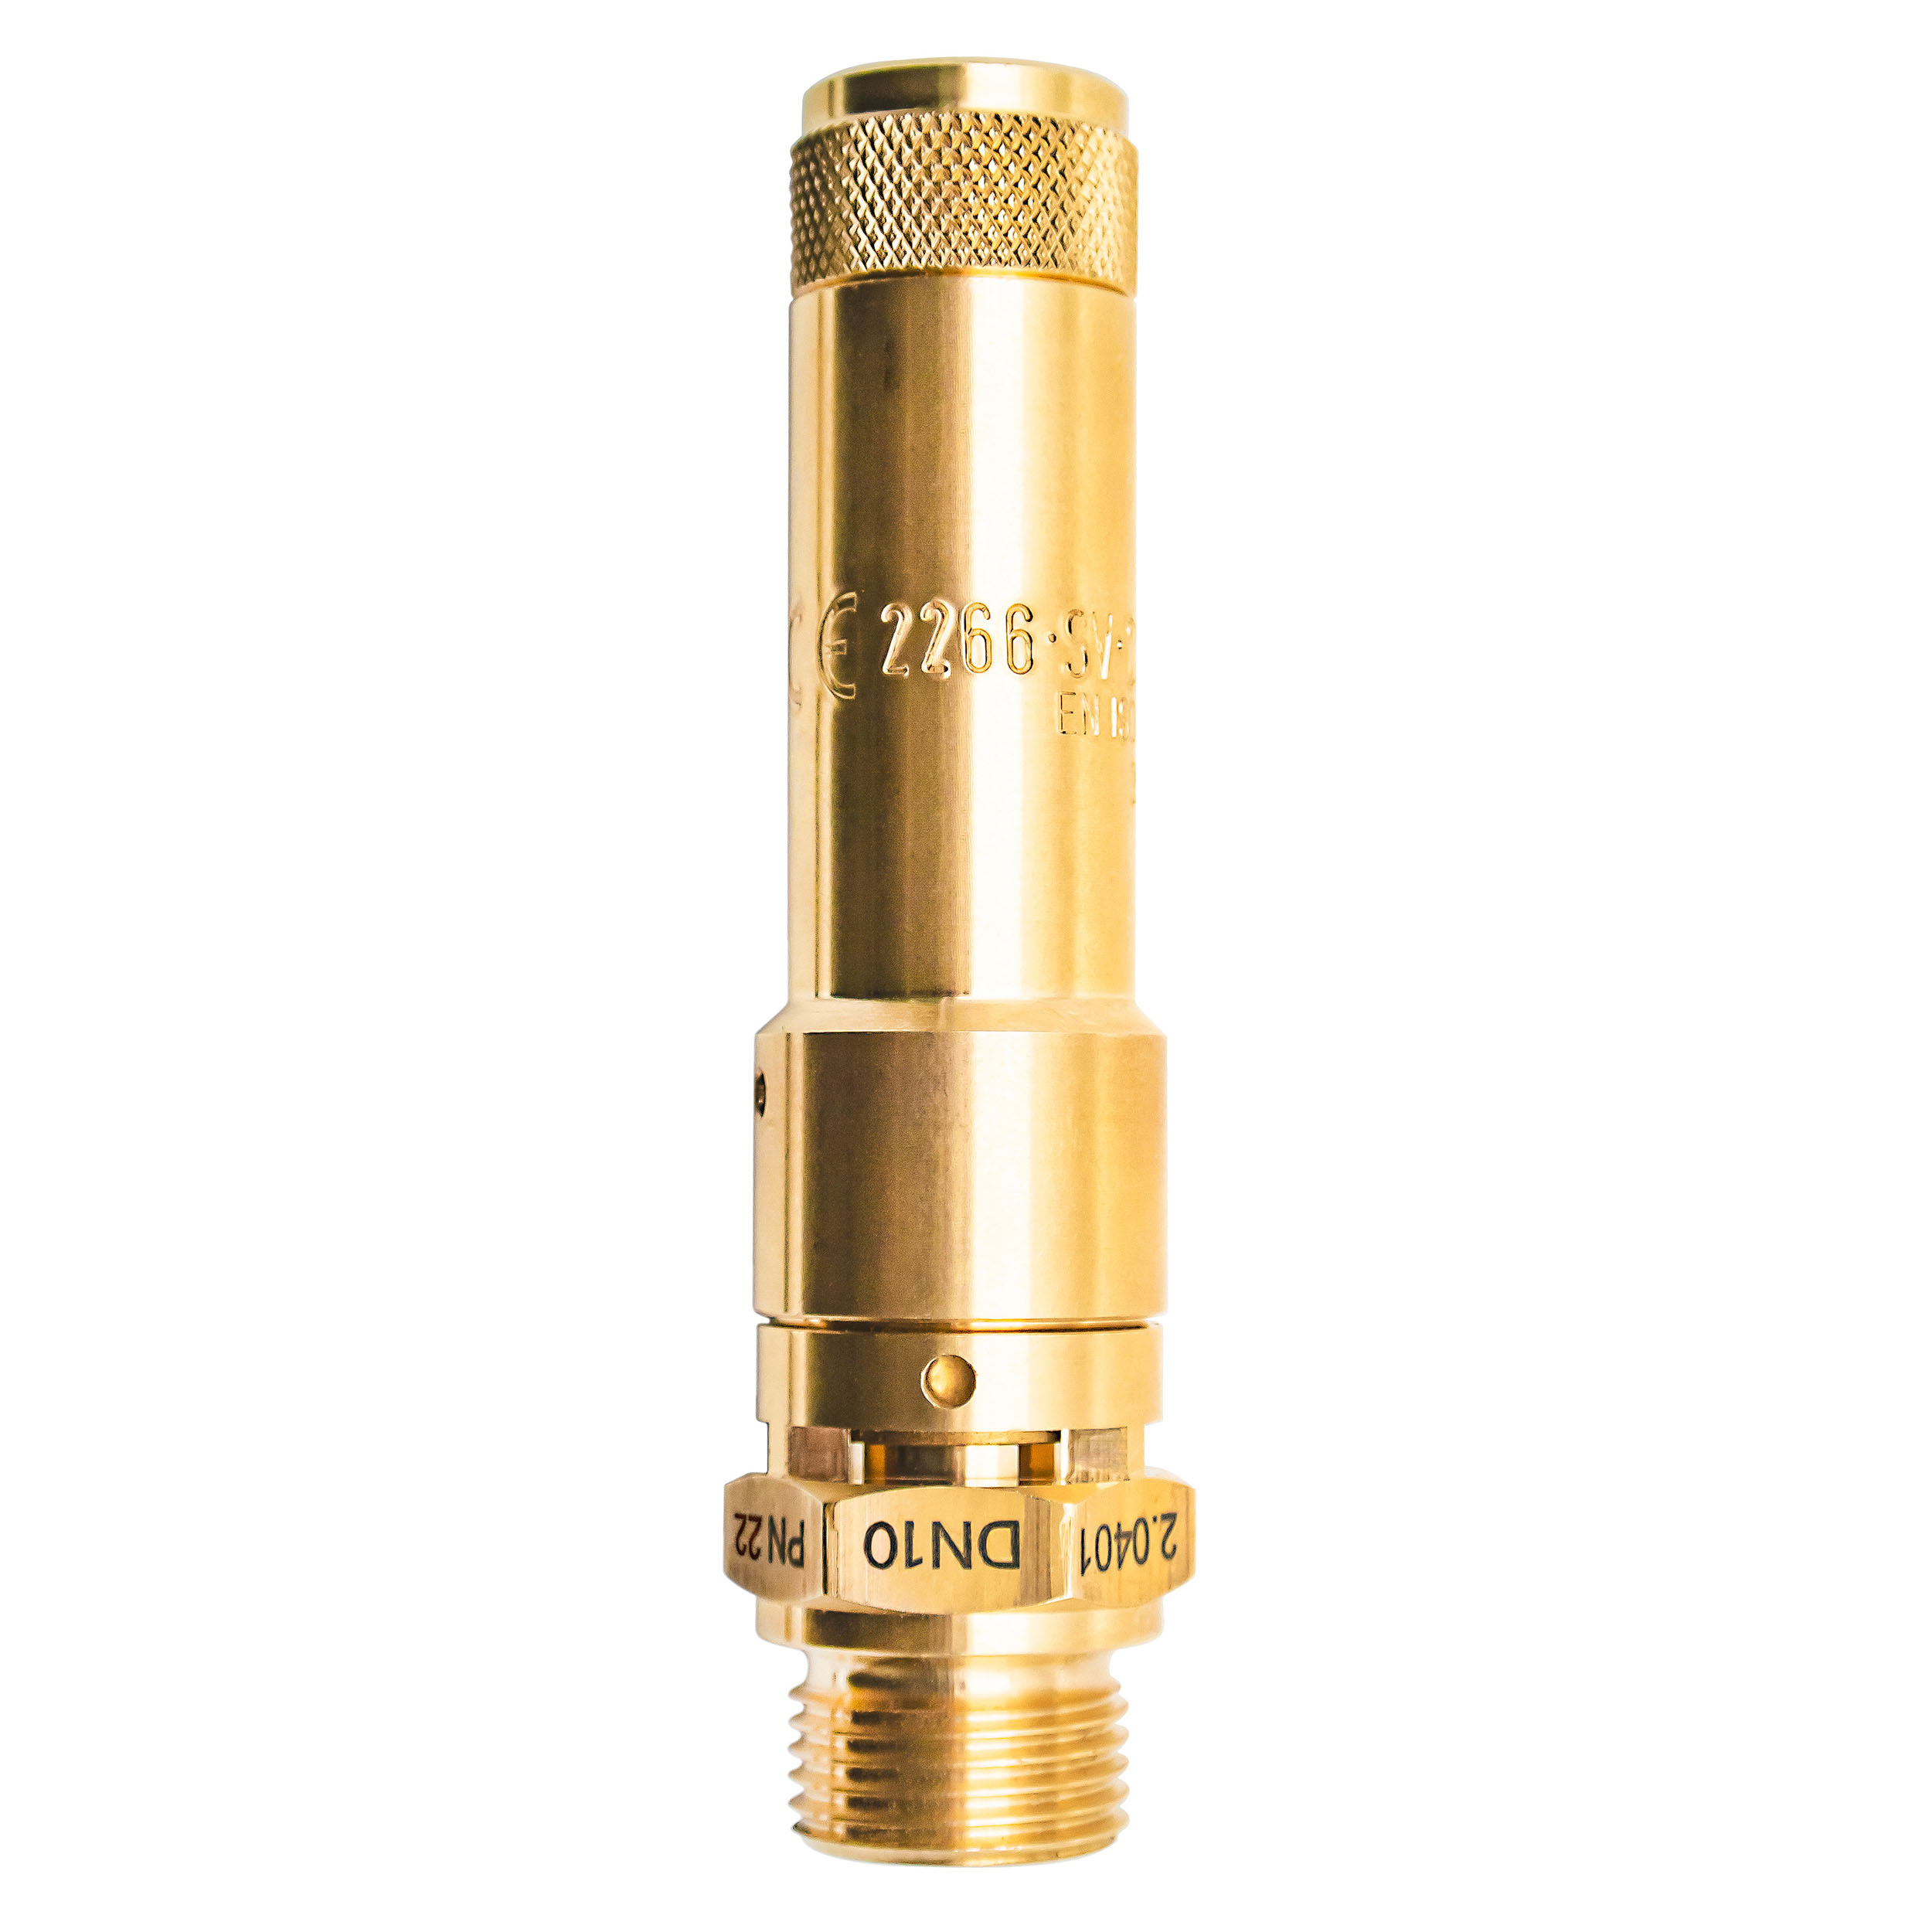 Savety valve component tested DN 10, G¾, set pressure: 5.7 bar (82,65 psi)